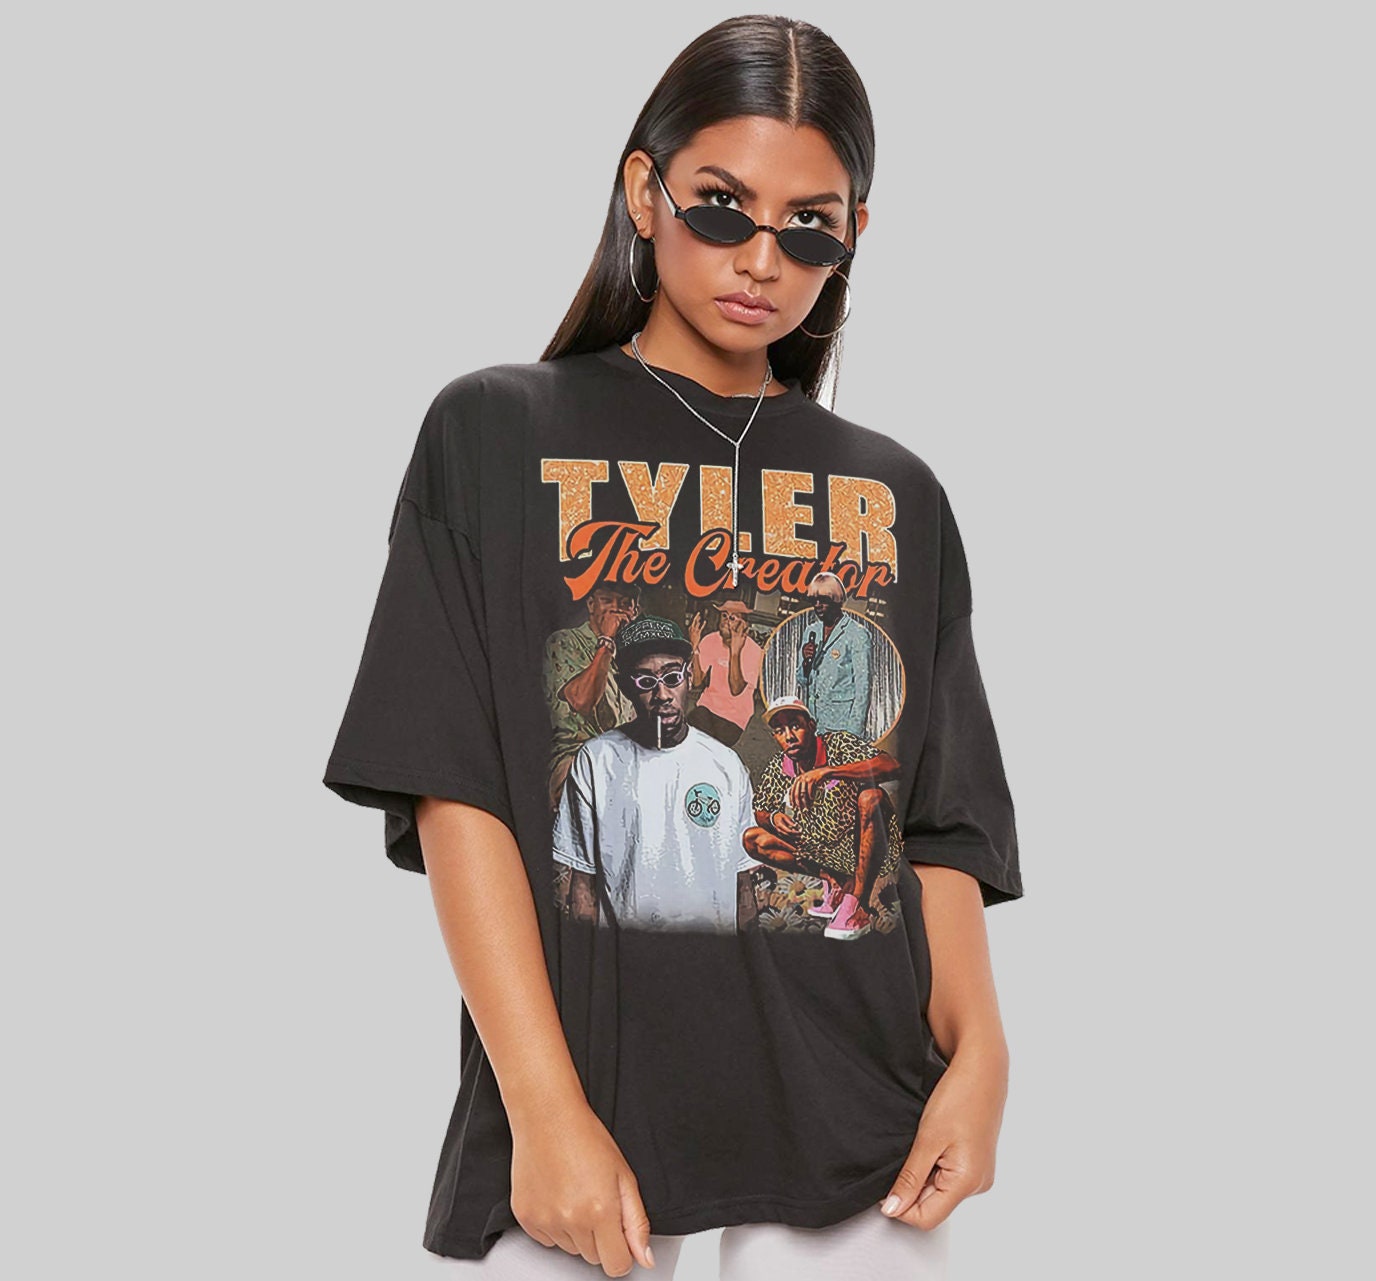 Tyler the Creator Rap Singer Funny T Shirt Men Women Unisex -  Norway